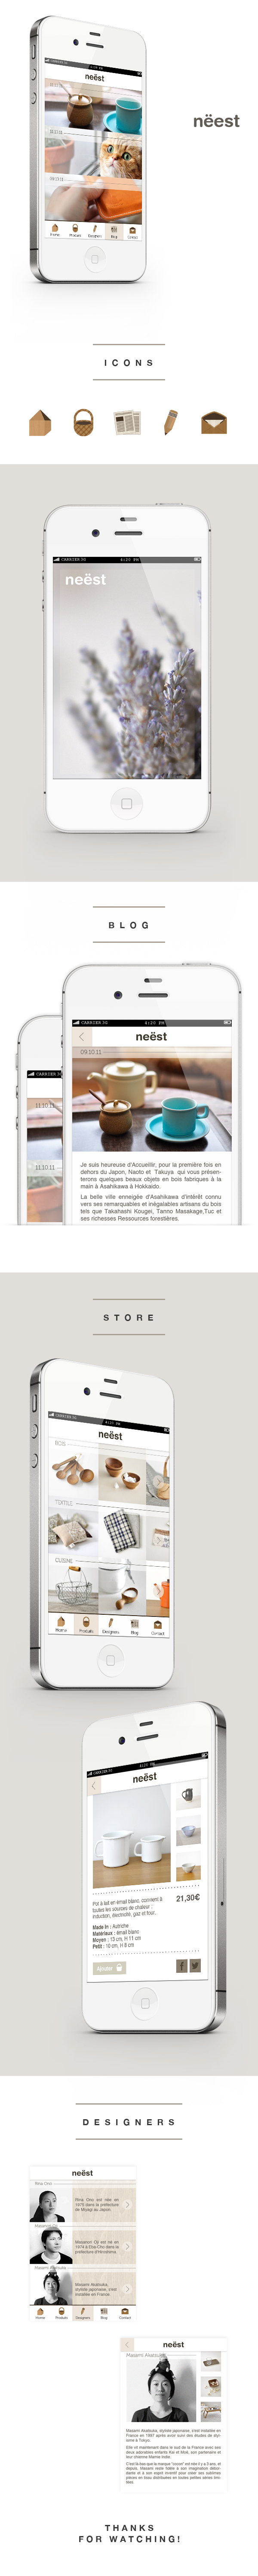 UI ux ergonomy app mobile interactive Blog inspiration design